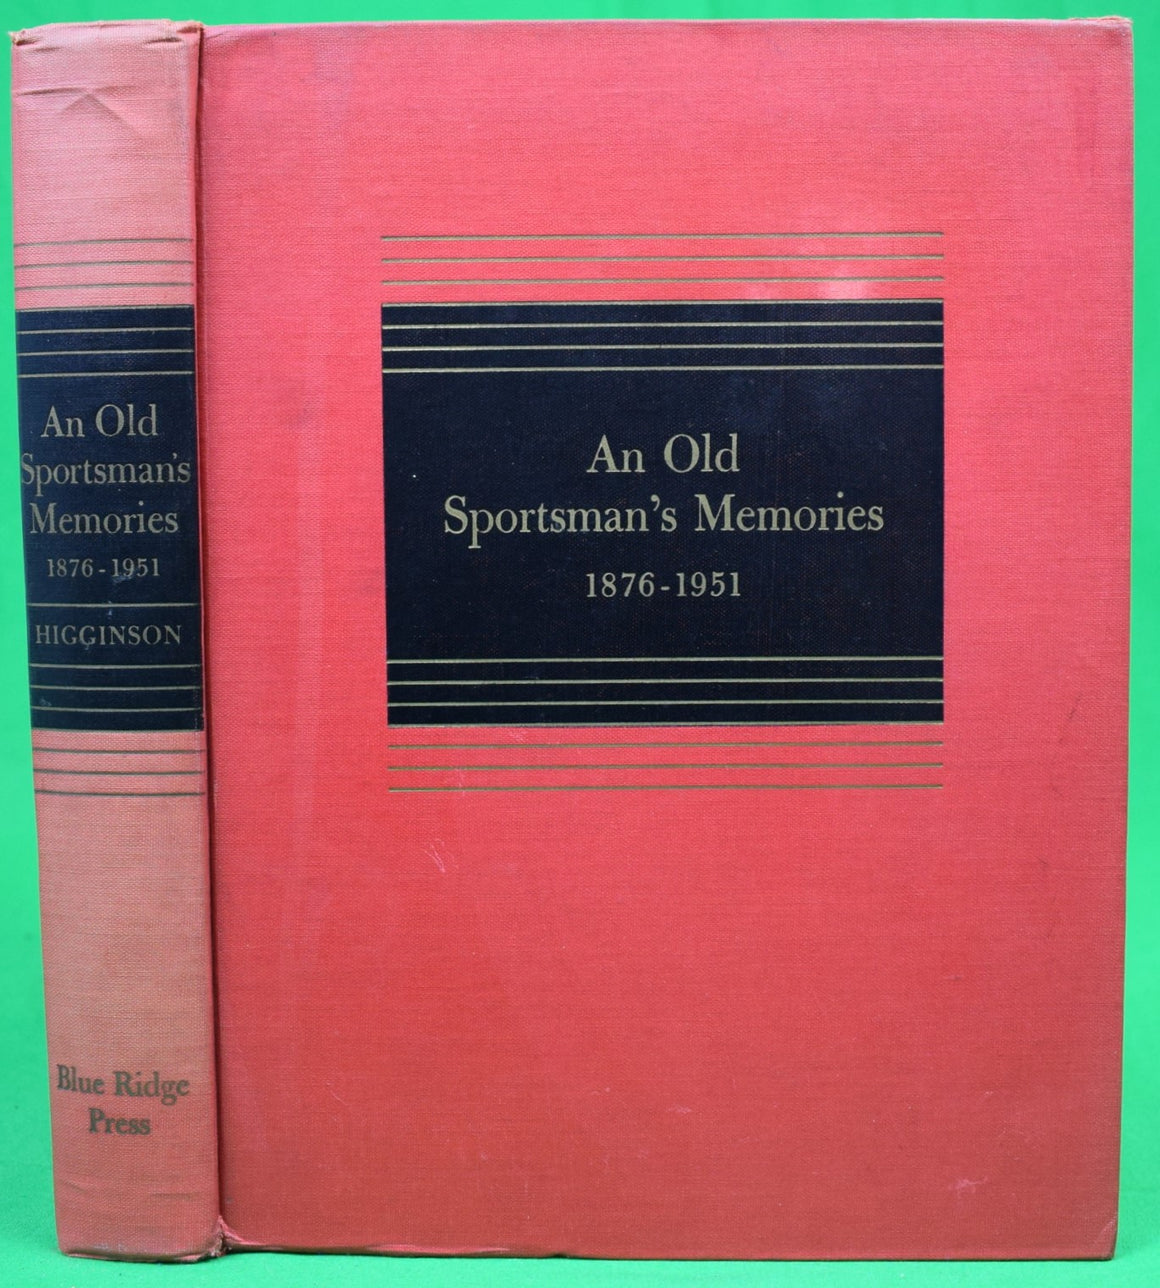 "An Old Sportsman's Memories: 1876-1951" 1951 HIGGINSON, Alexander Henry